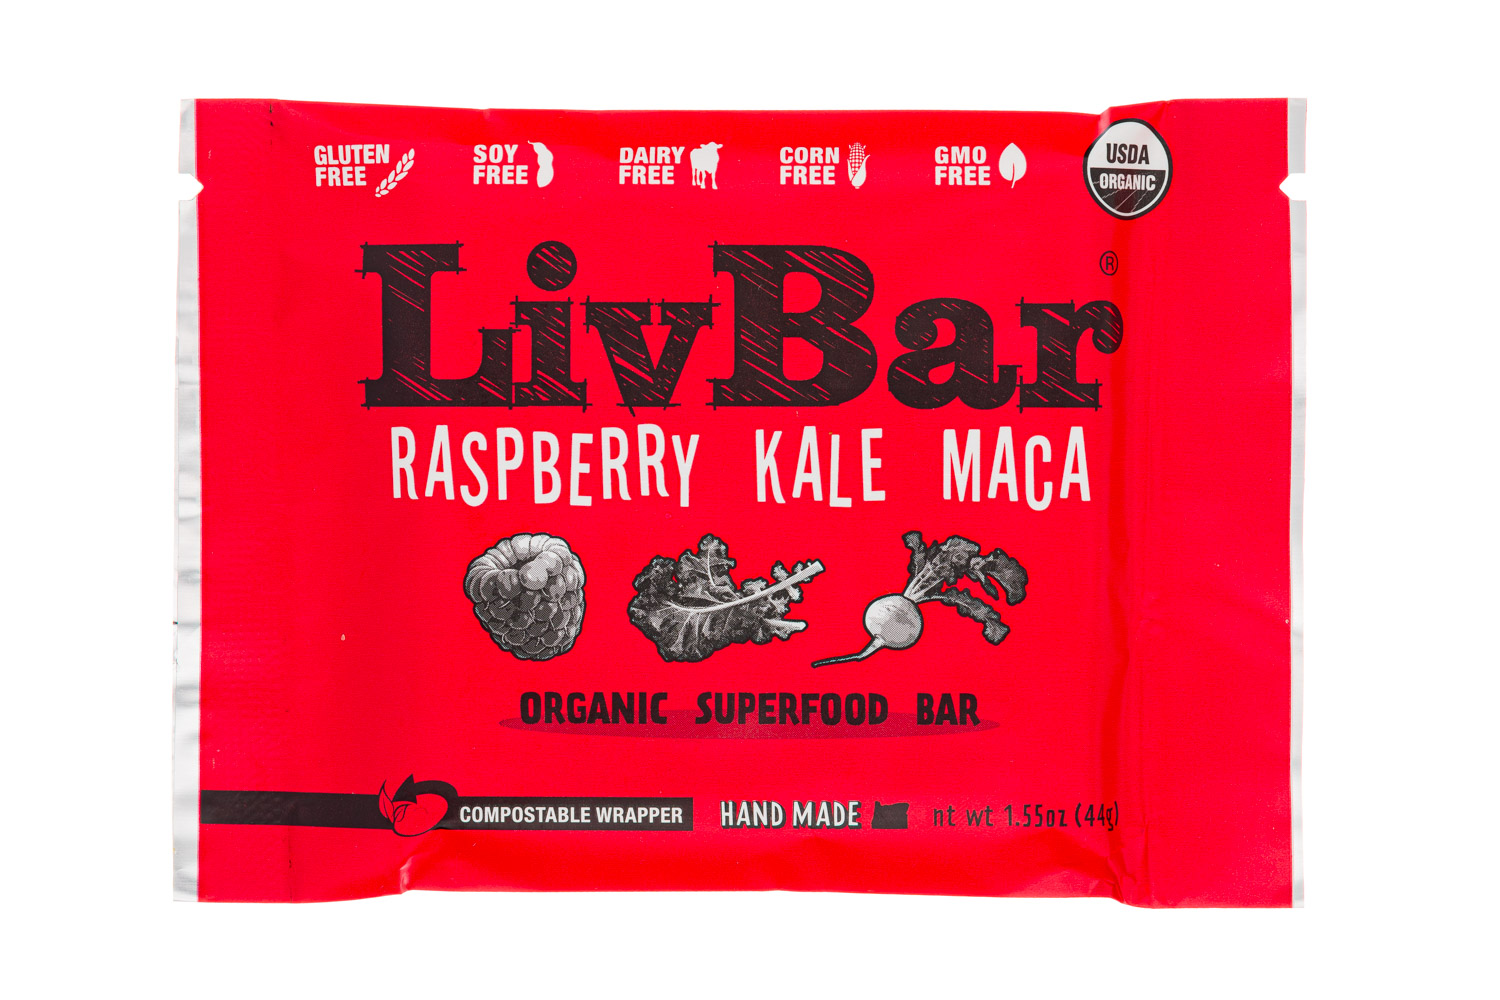 Raspberry Kale Maca